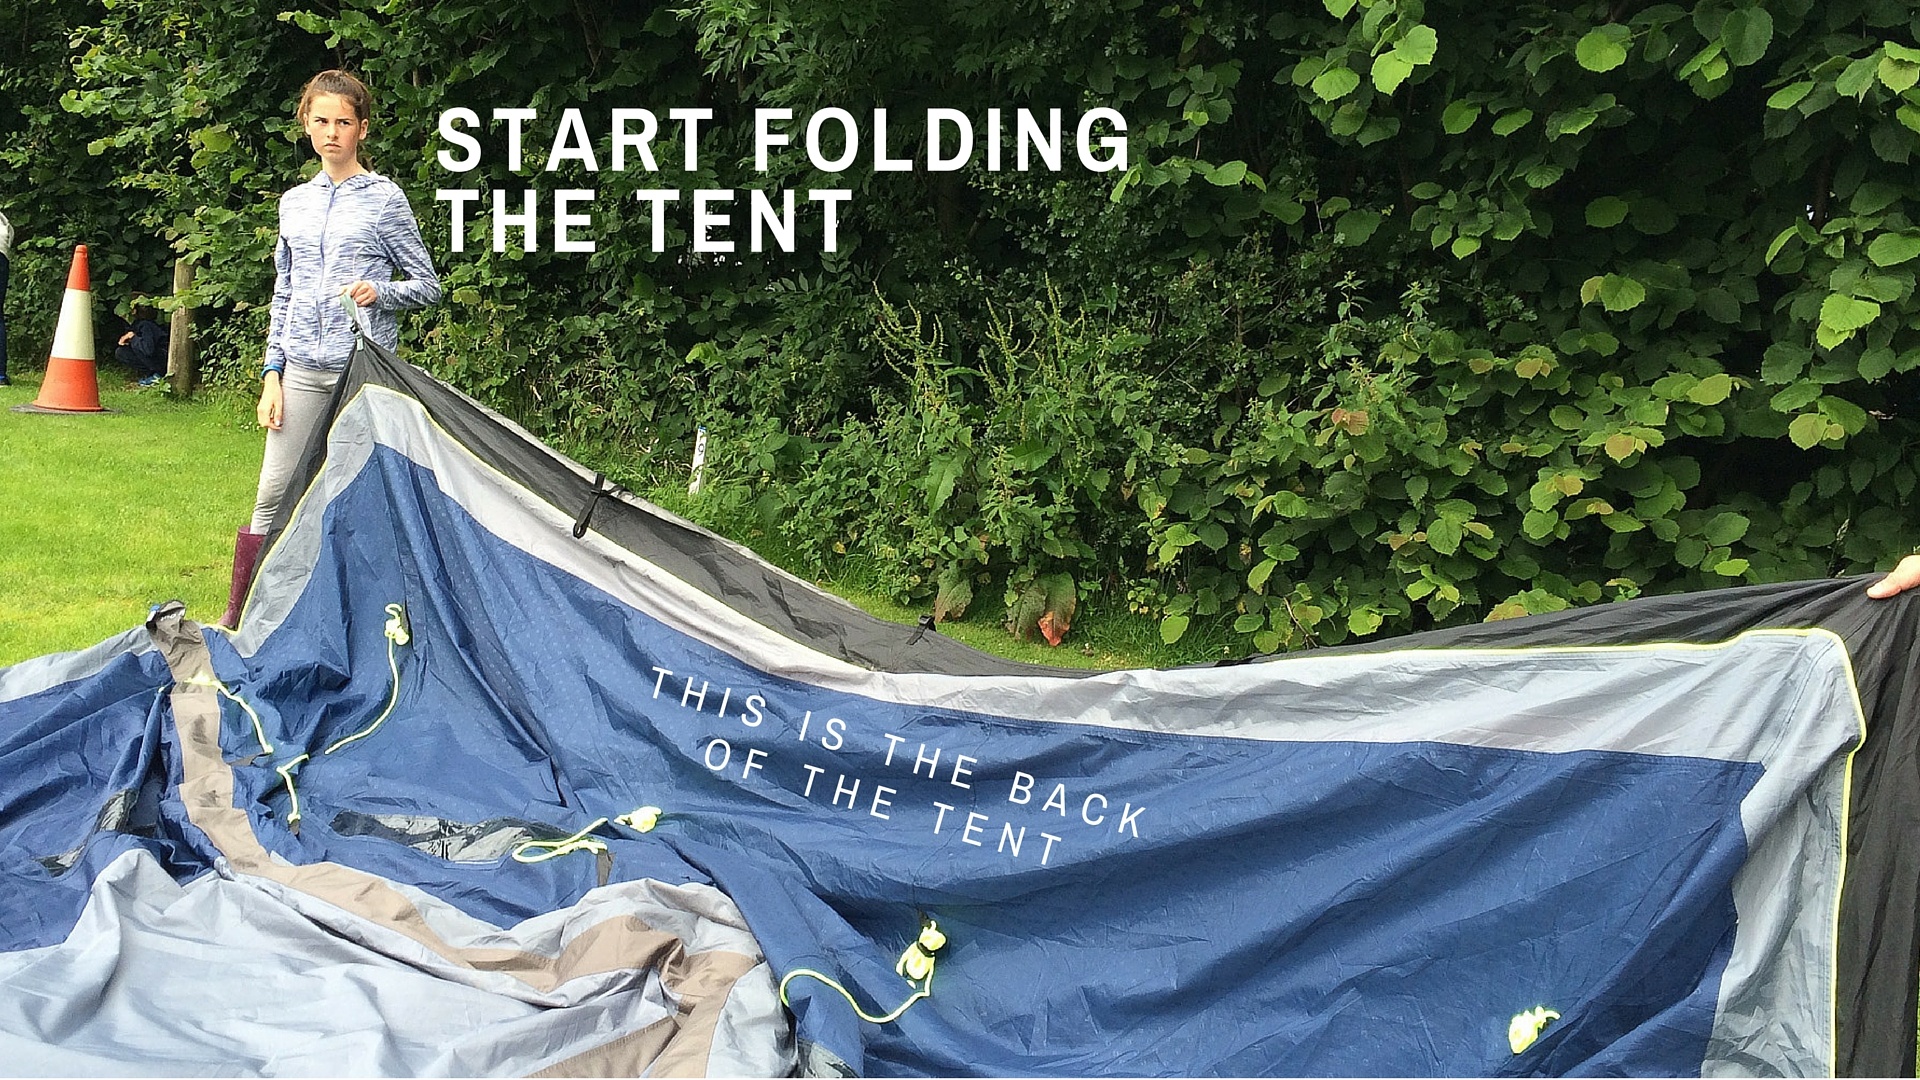 Start folding the tent